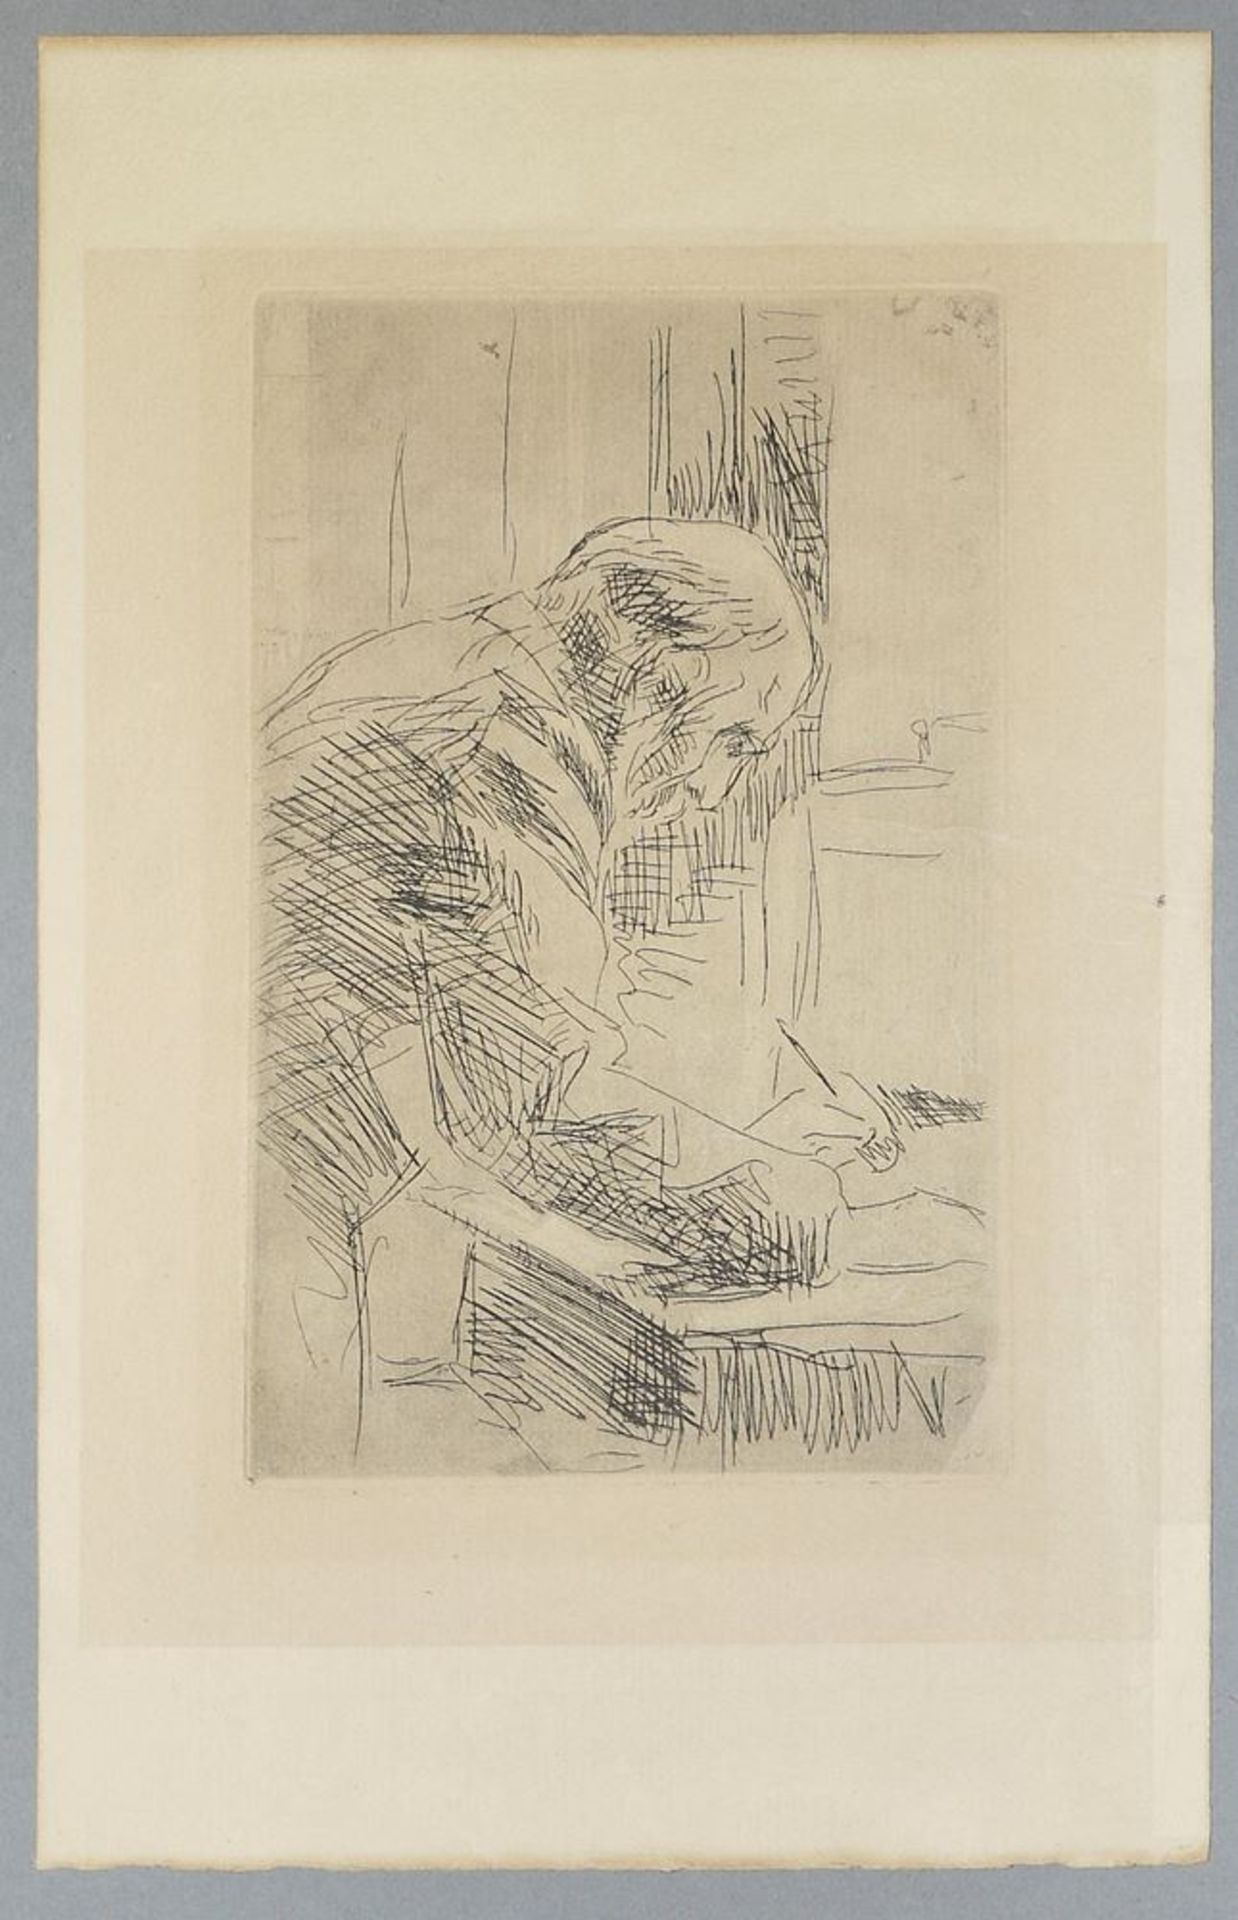 Pierre Bonnard, "Le Graveur", Selbstportrait, Radierung